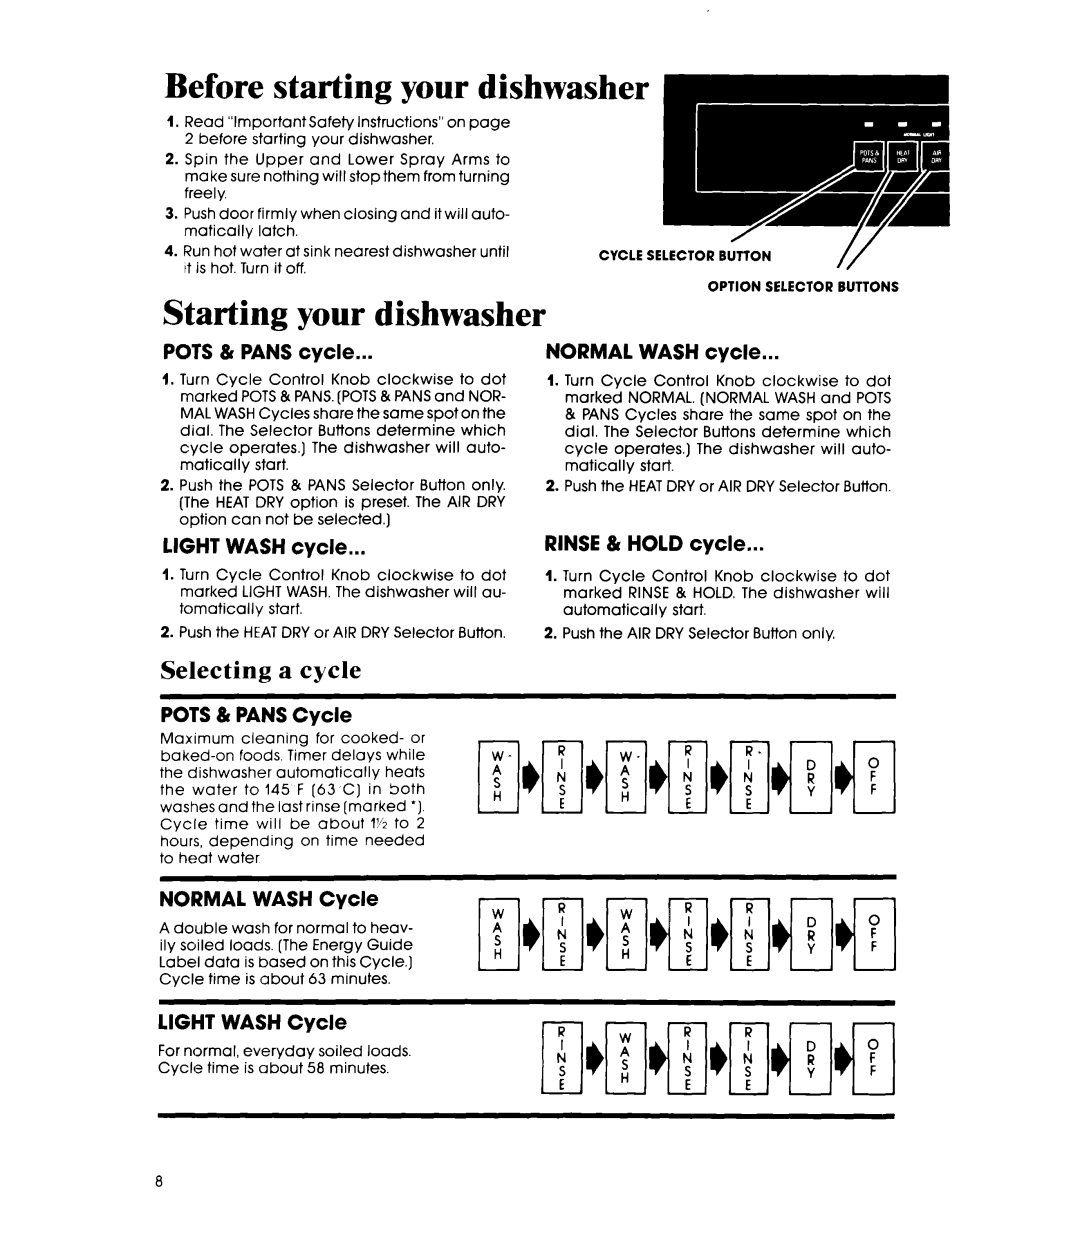 Whirlpool DU8300XT manual Before starting your dishwasher, Starting your dishwasher, Selecting a cycle, lil’l’l IA 